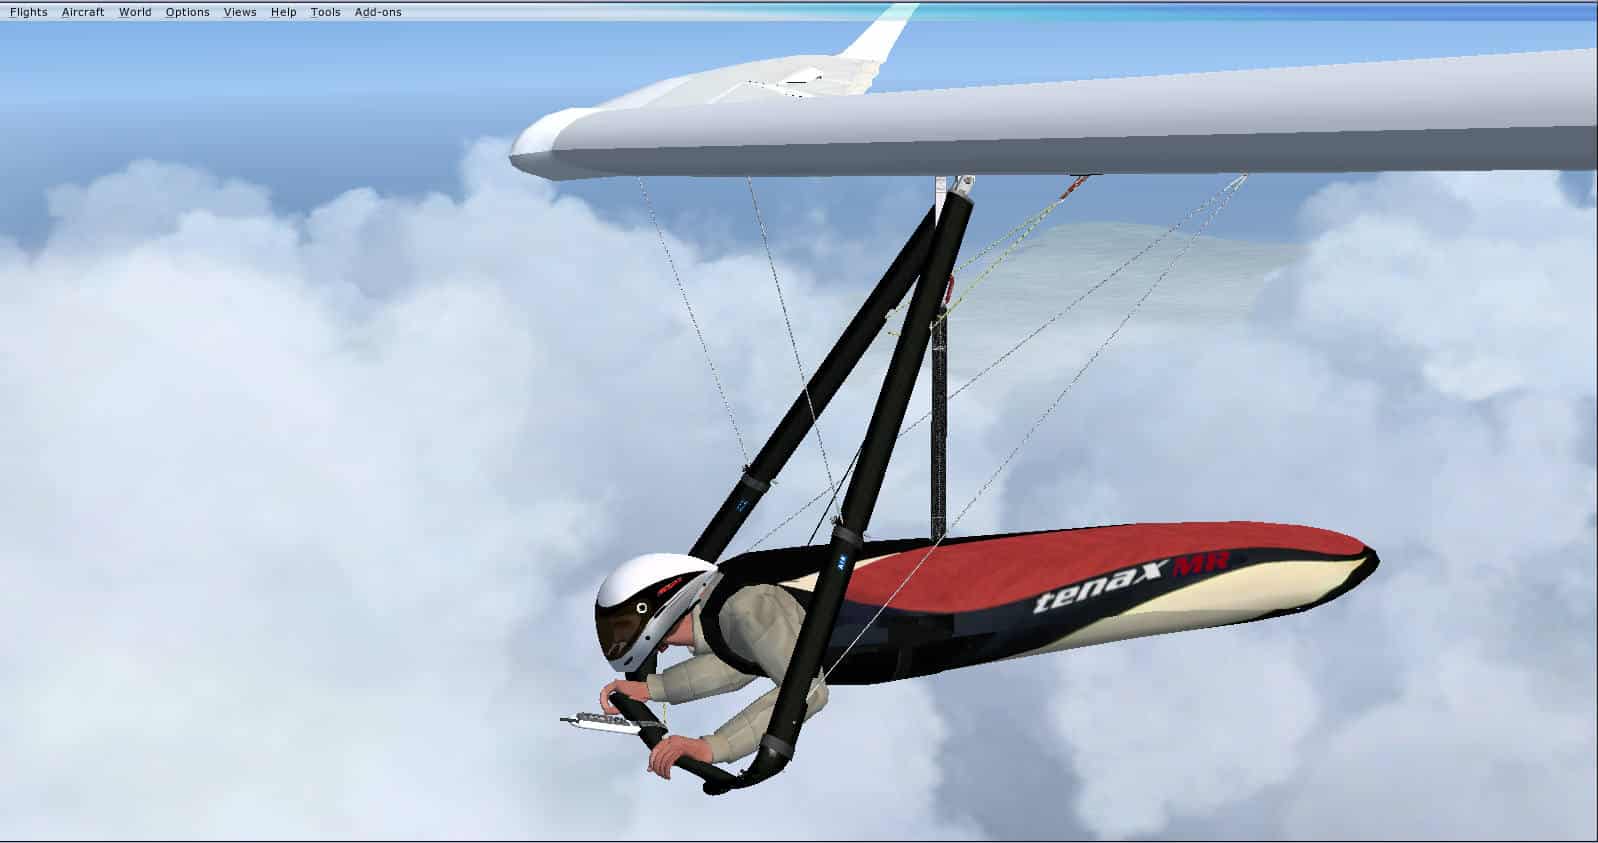 FSX/FS2004 A-I-R Atos VR Hang Glider - Microsoft Simulator Mod